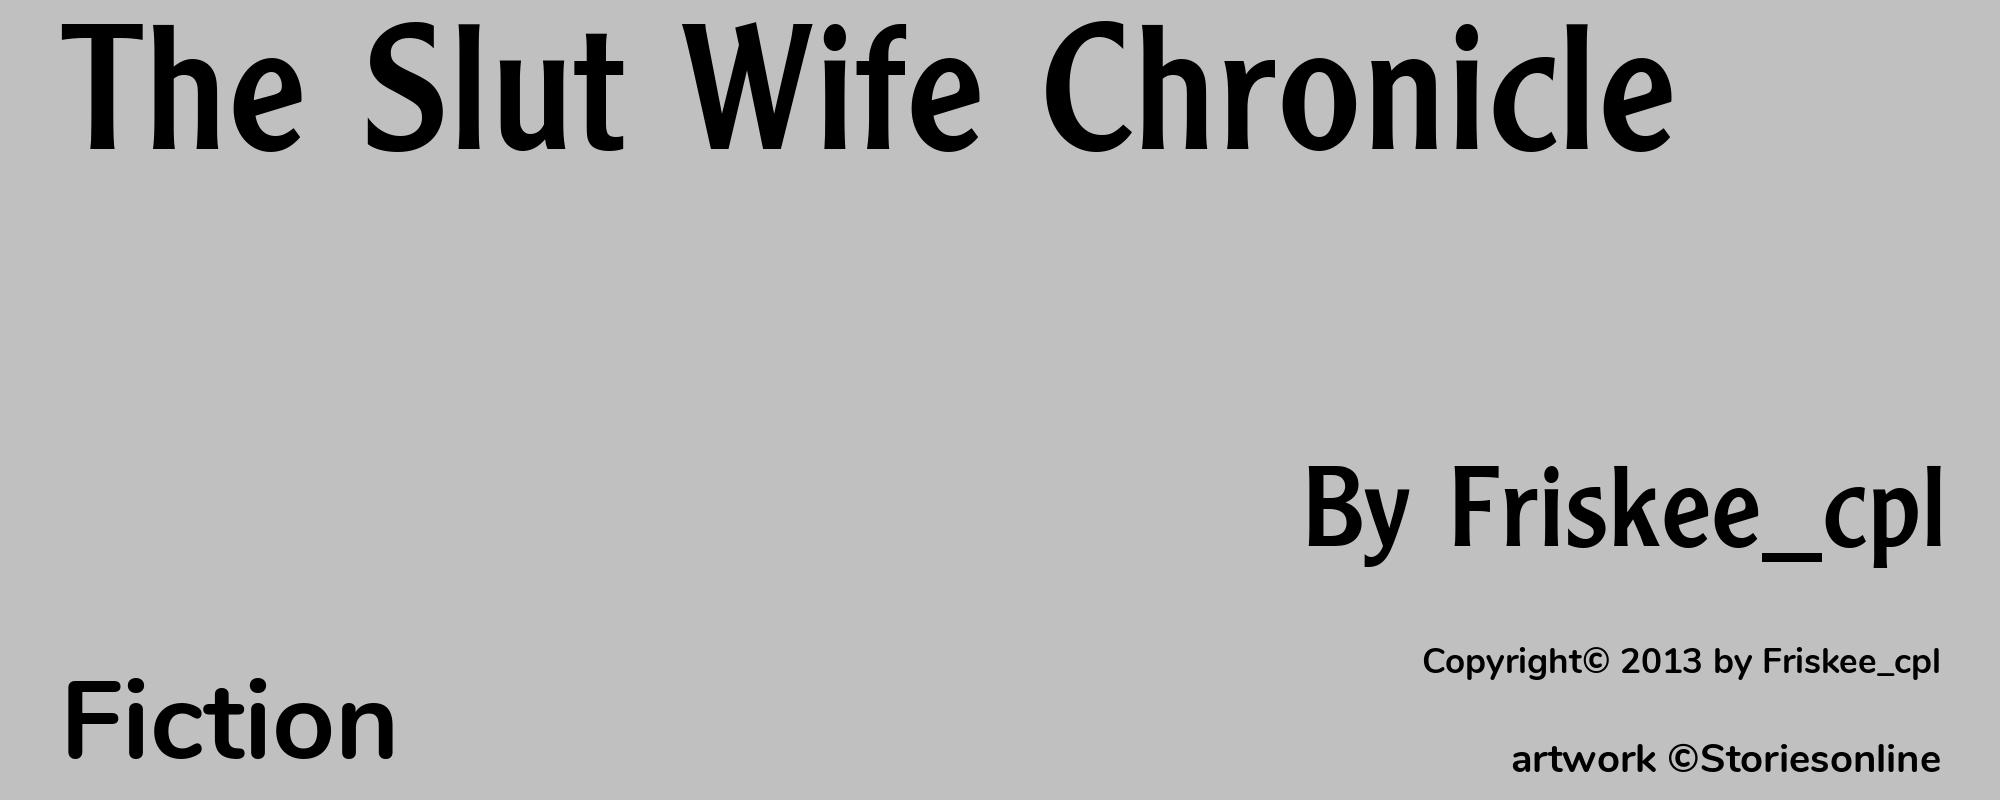 The Slut Wife Chronicle - Cover